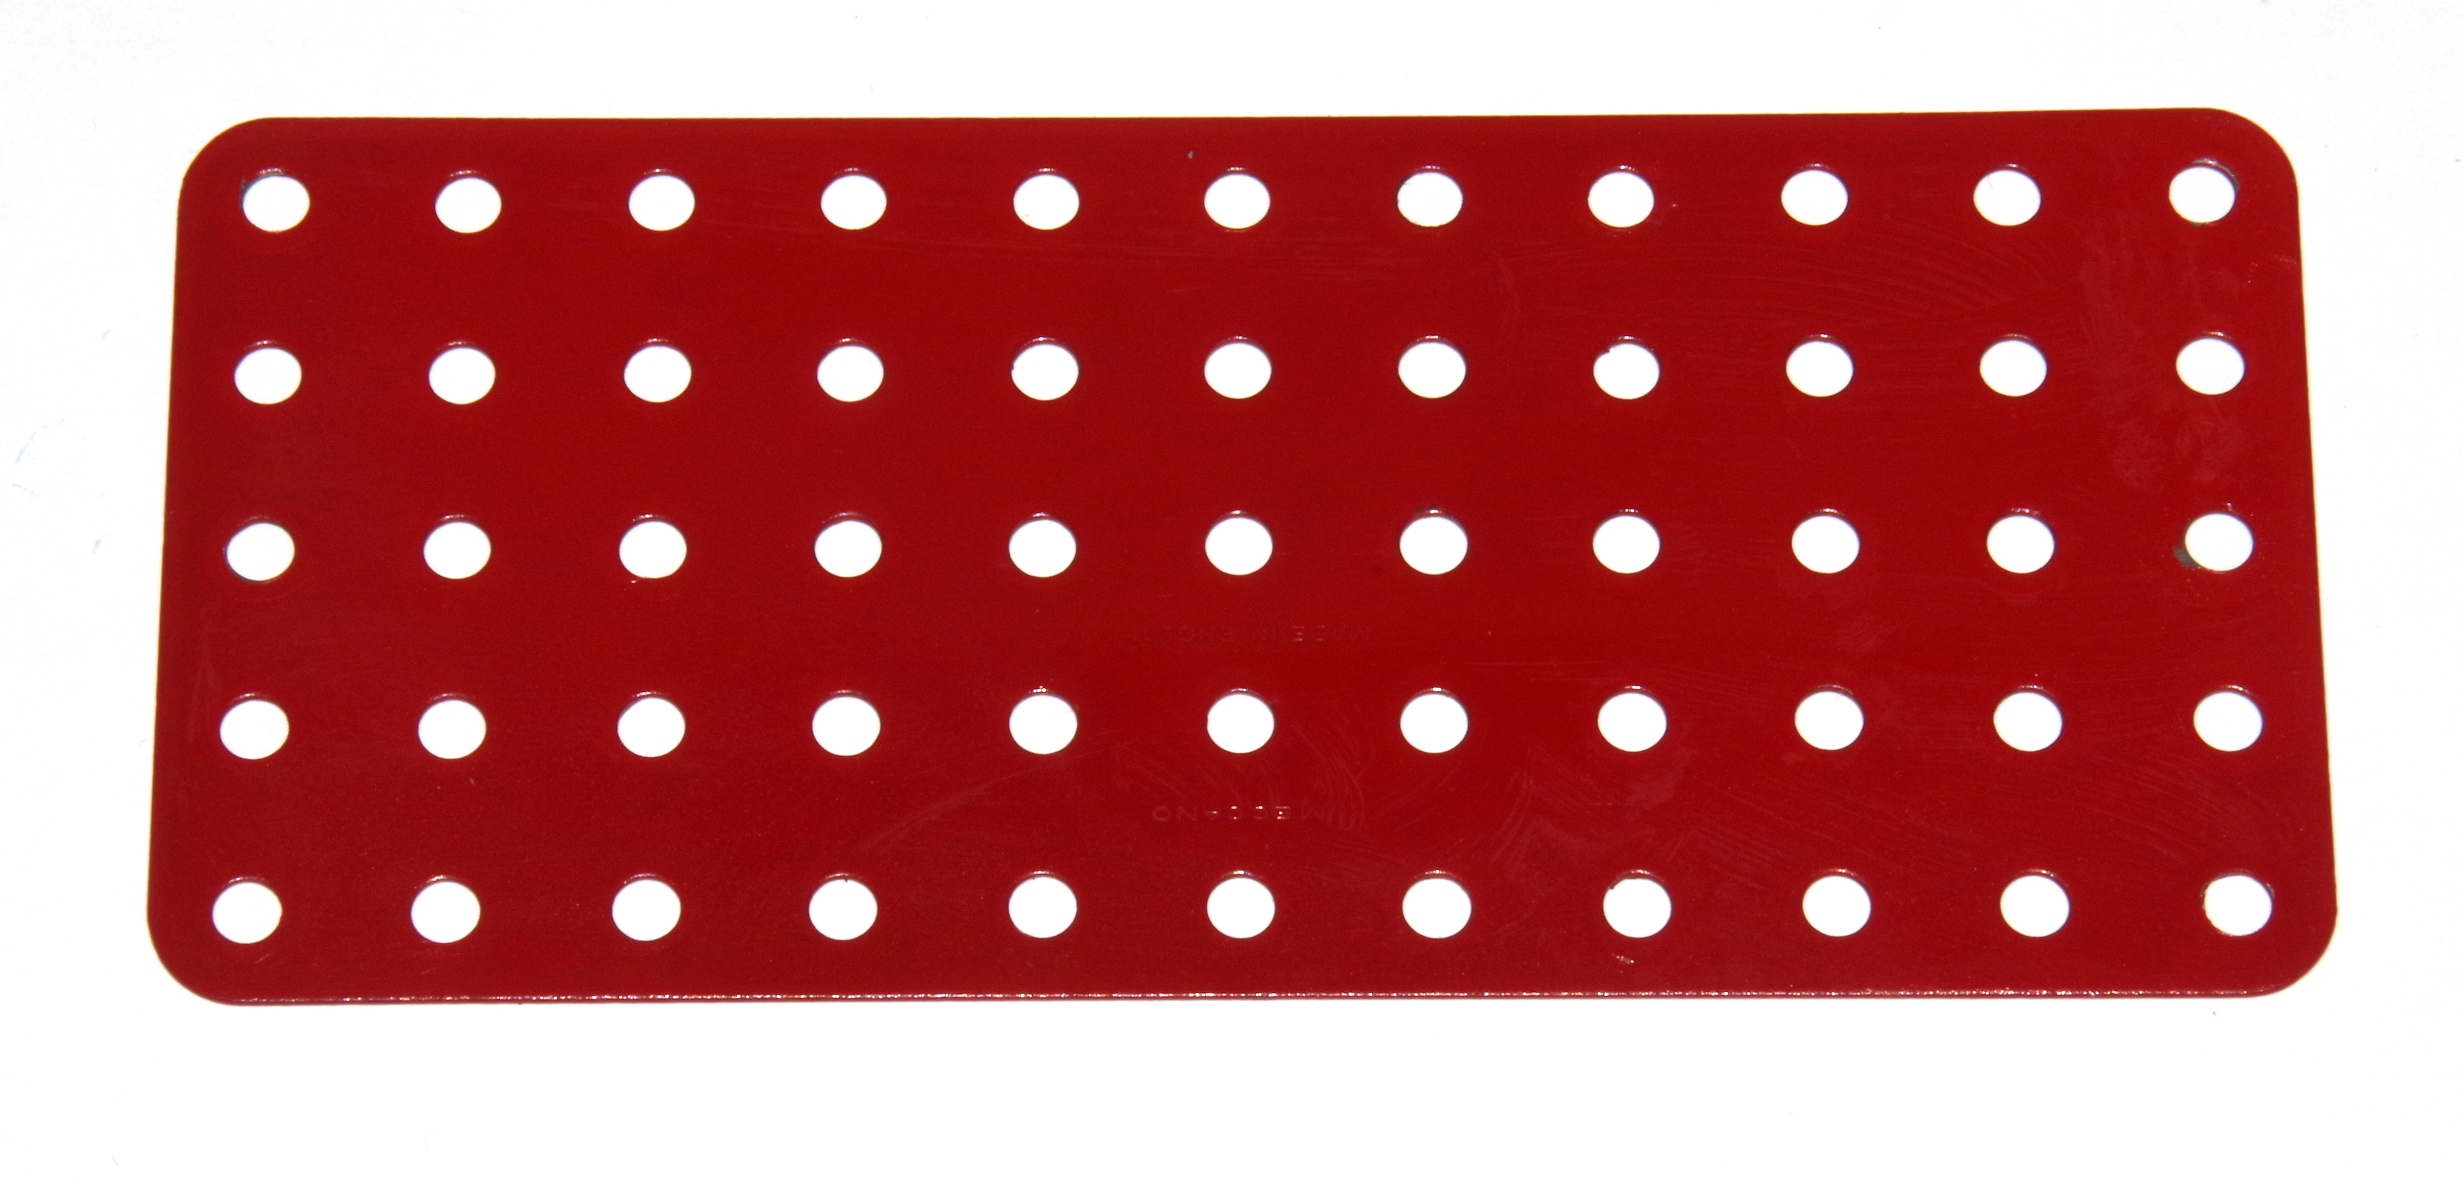 Meccano Part 70 Flat Plate 5x11 Hole Red Repainted Original